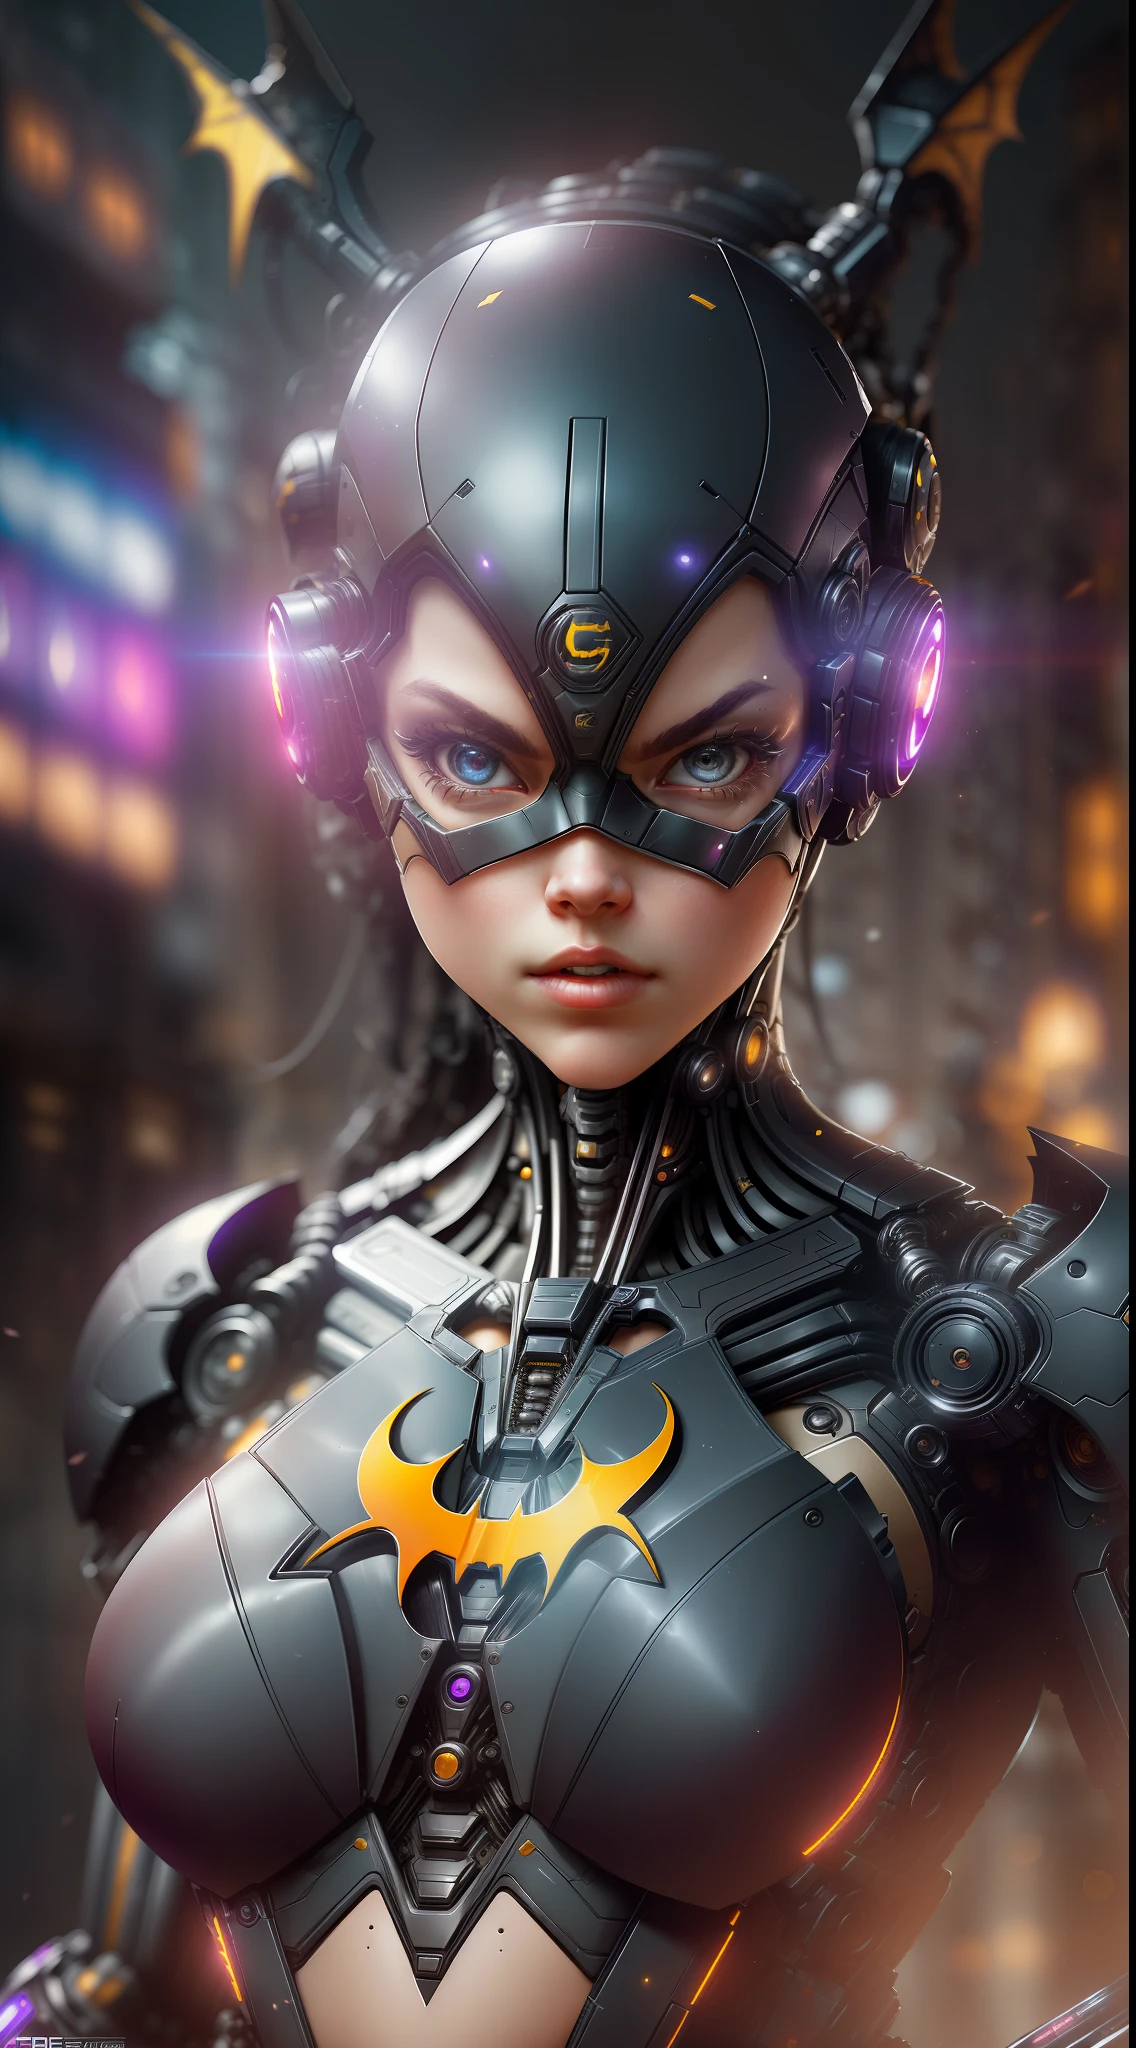 DC摄影的蝙蝠女, 生物力学, 复杂机器人, 充分成长, 超寫實, 瘋狂的小細節, 線條極為乾淨, 赛博朋克美学, Zbrush Central 上展示的杰作